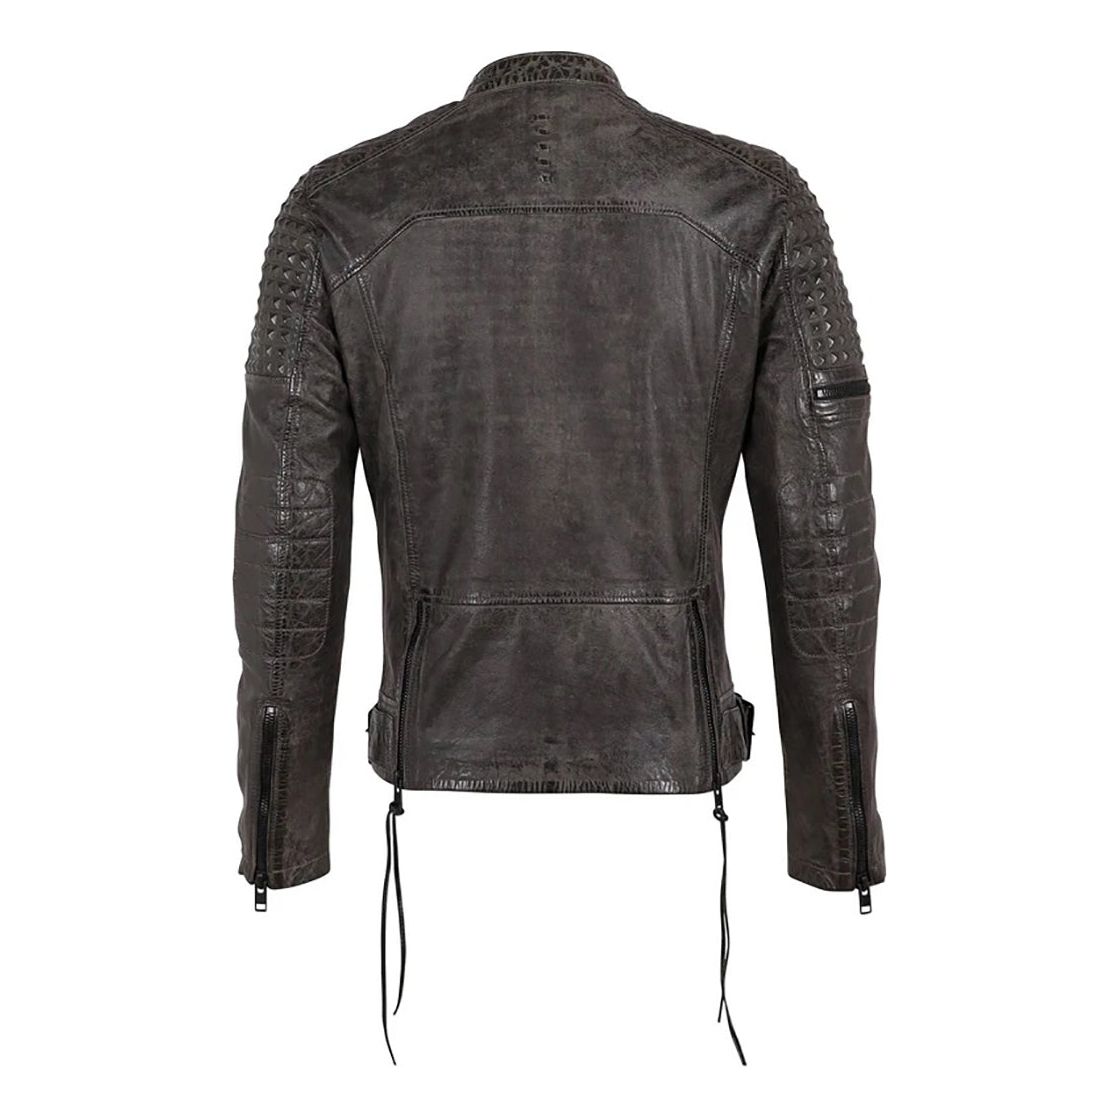 Mauritius Men's Mahon Fashion Moto Leather Jacket-Real Leather Jacket Anthracite